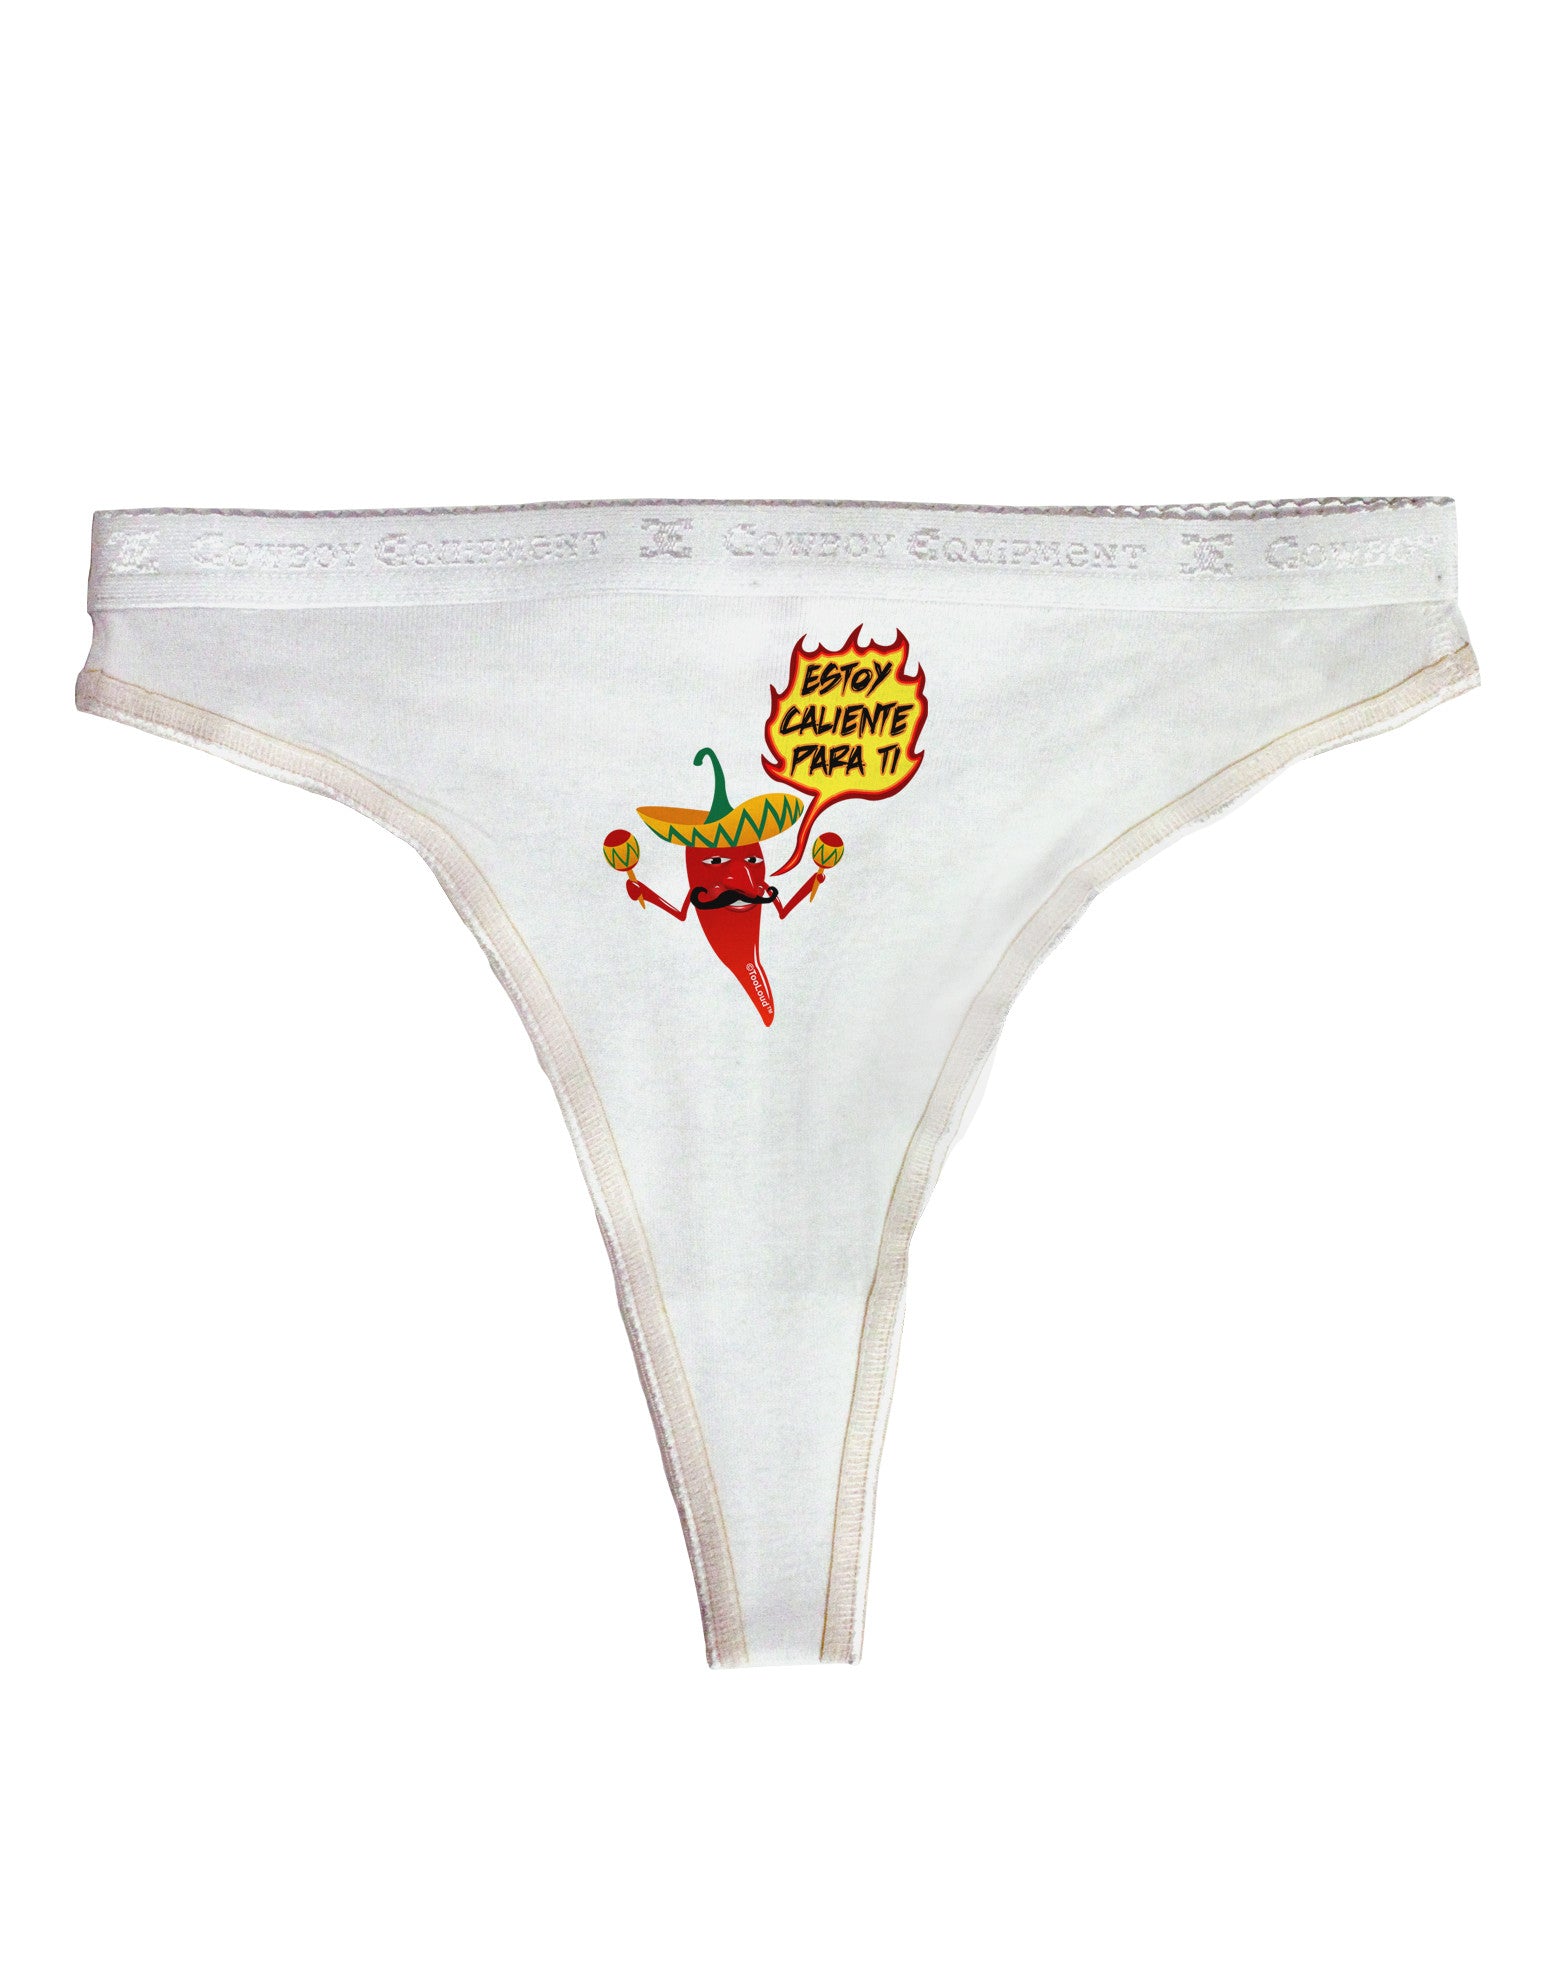 Estoy Caliente Para Ti Womens Thong Underwear - Davson Sales